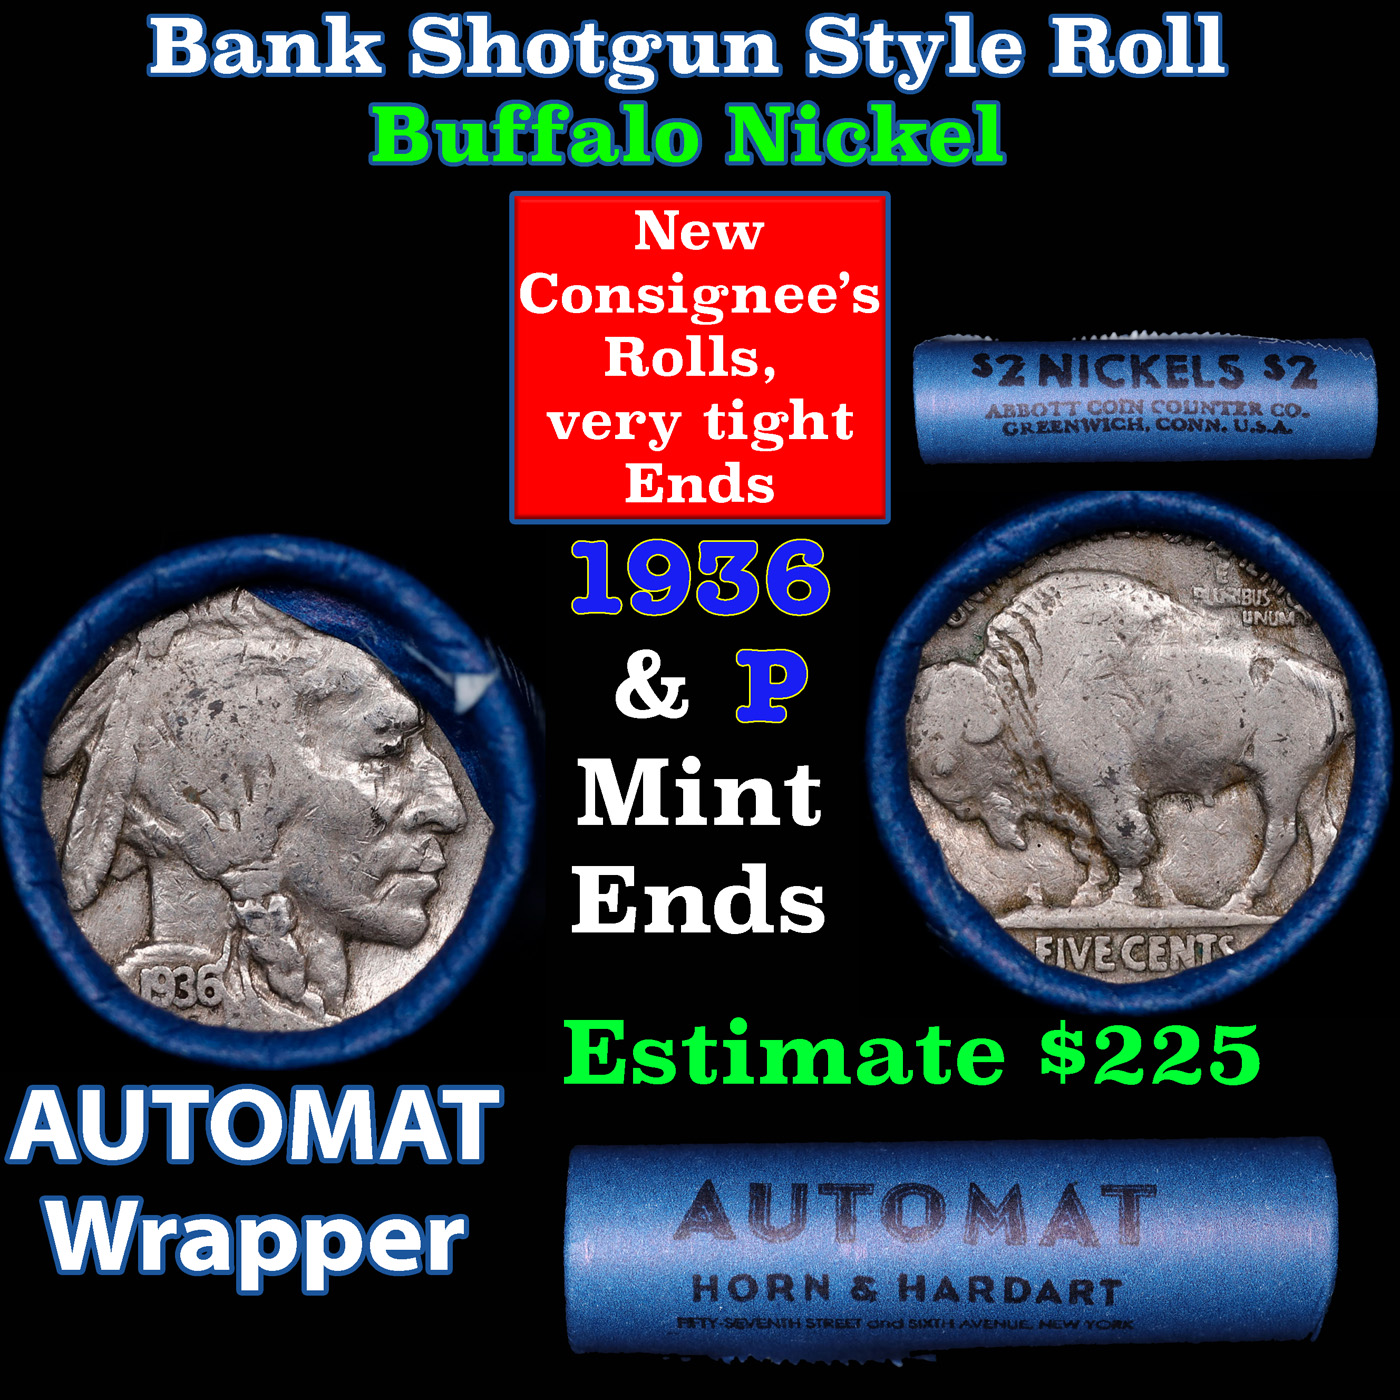 Buffalo Nickel Shotgun Roll in Old Bank Style | Proxibid